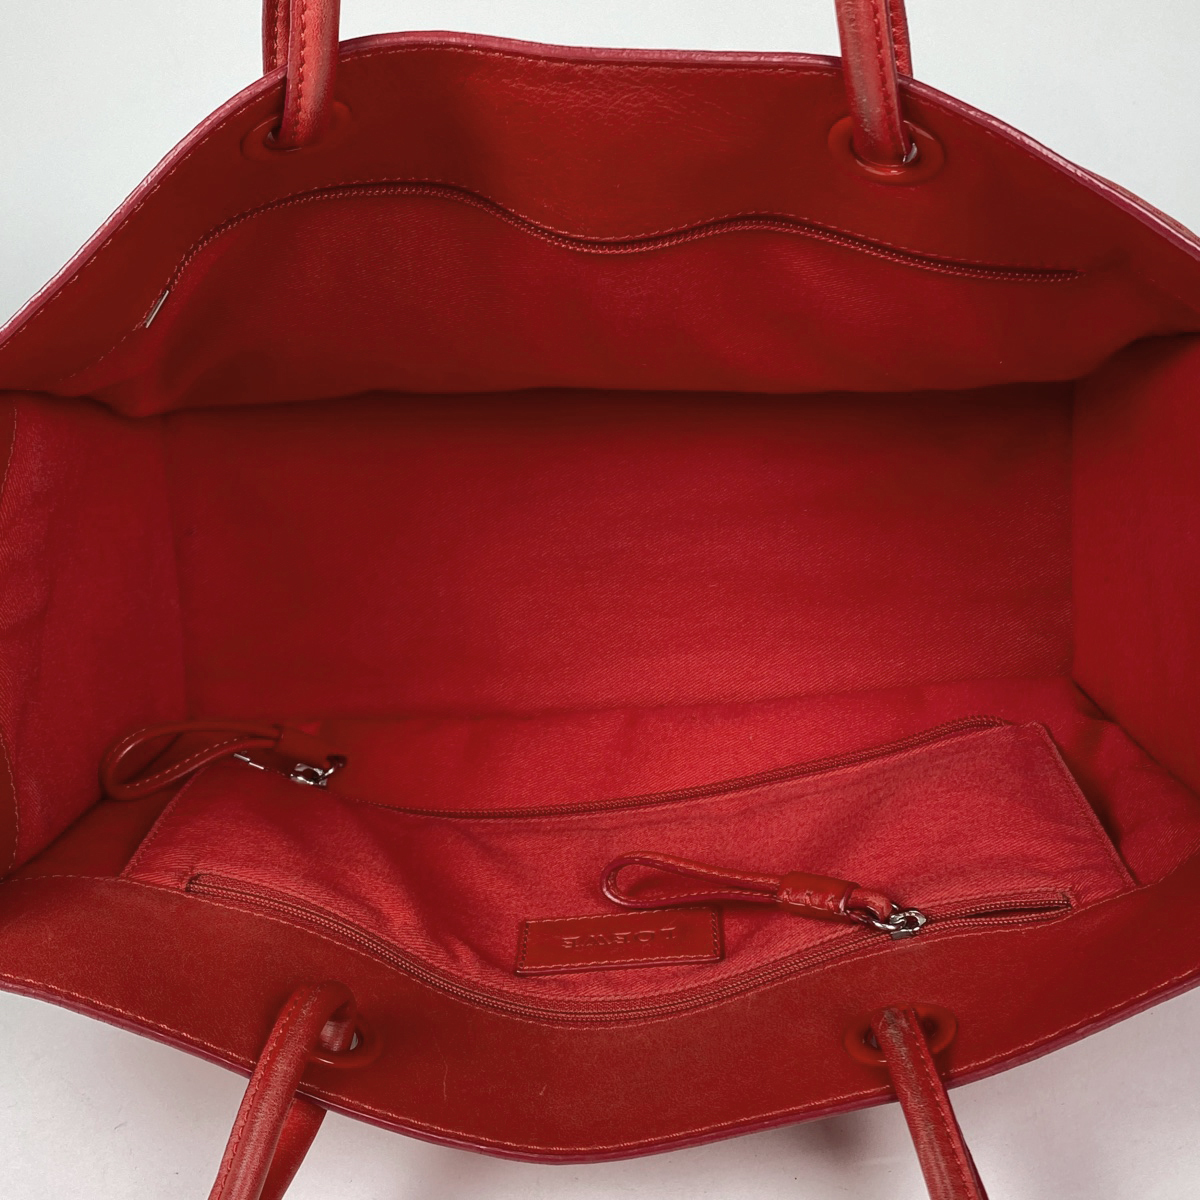  Loewe LOEWE стежок Logo большая сумка заклепки Crown shopa- большая сумка кожа красный женский [ б/у ]